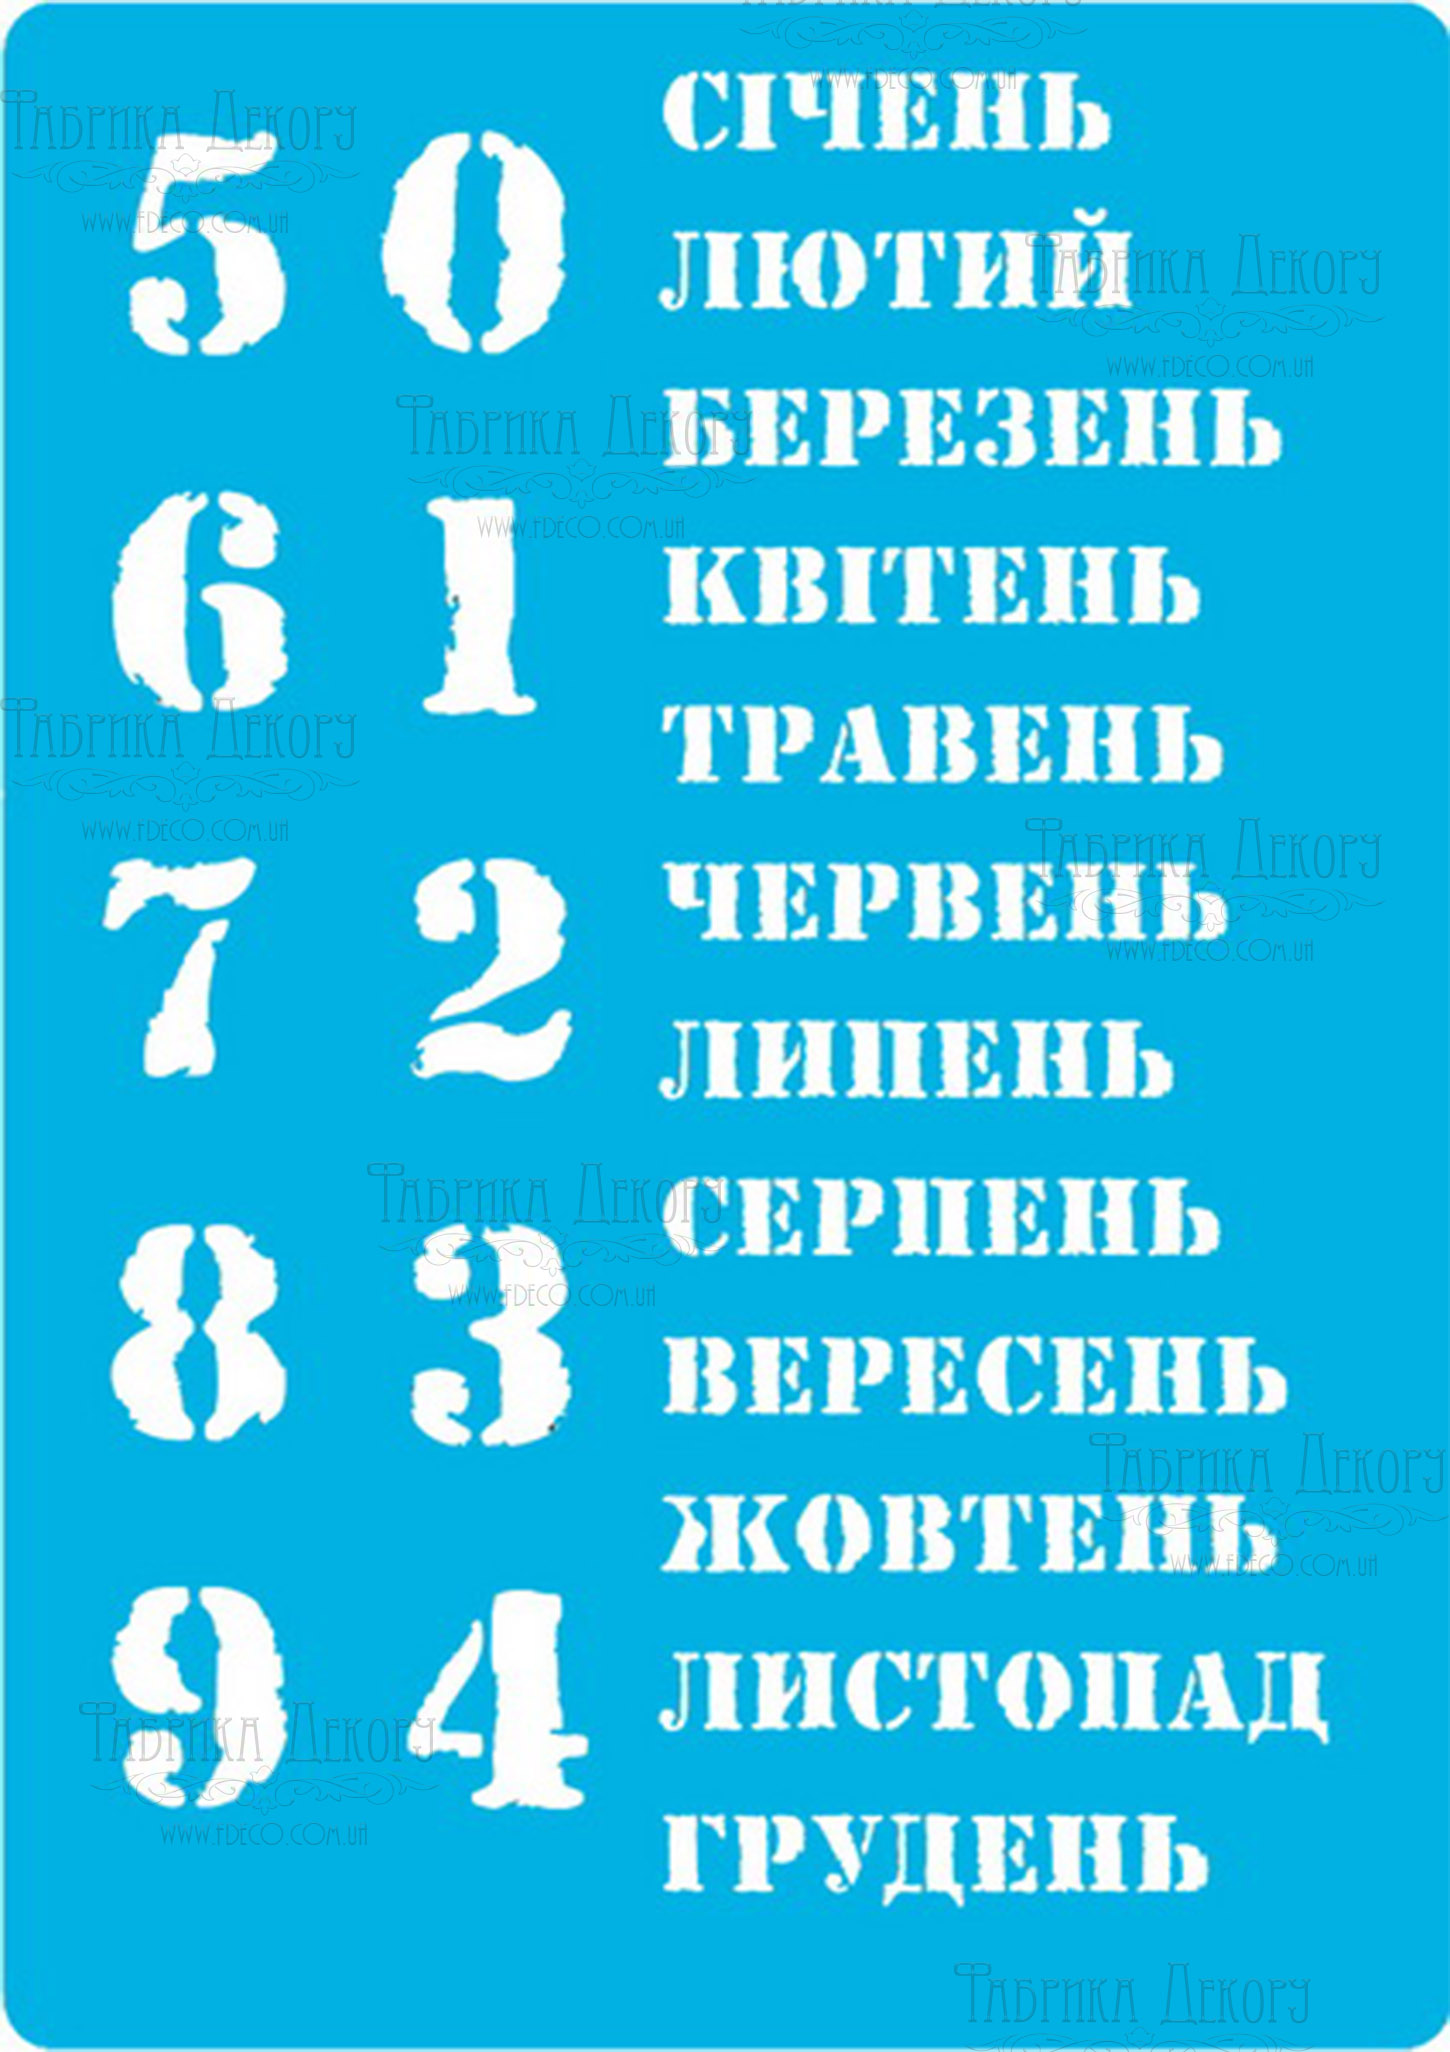 Stencil for crafts 15x20cm "Perpetual calendar - Ukrainian" #205